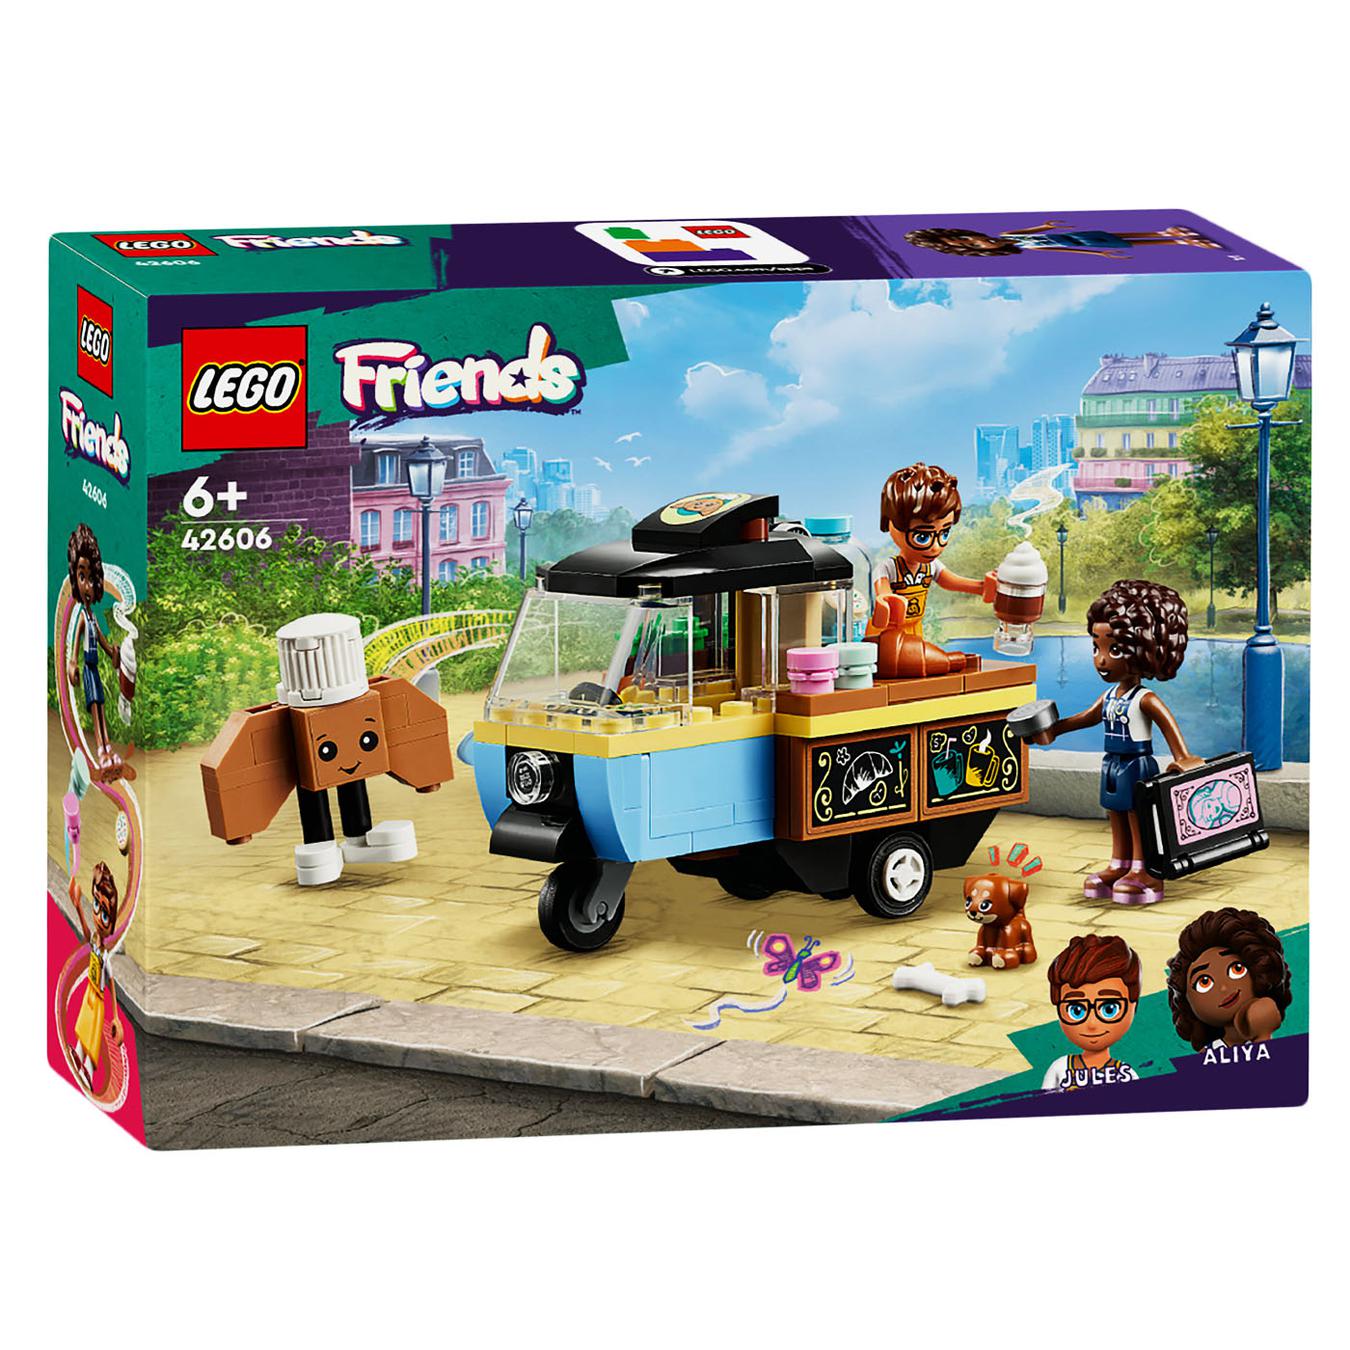 Constructor LEGO Friends 42606 Bakery on wheels